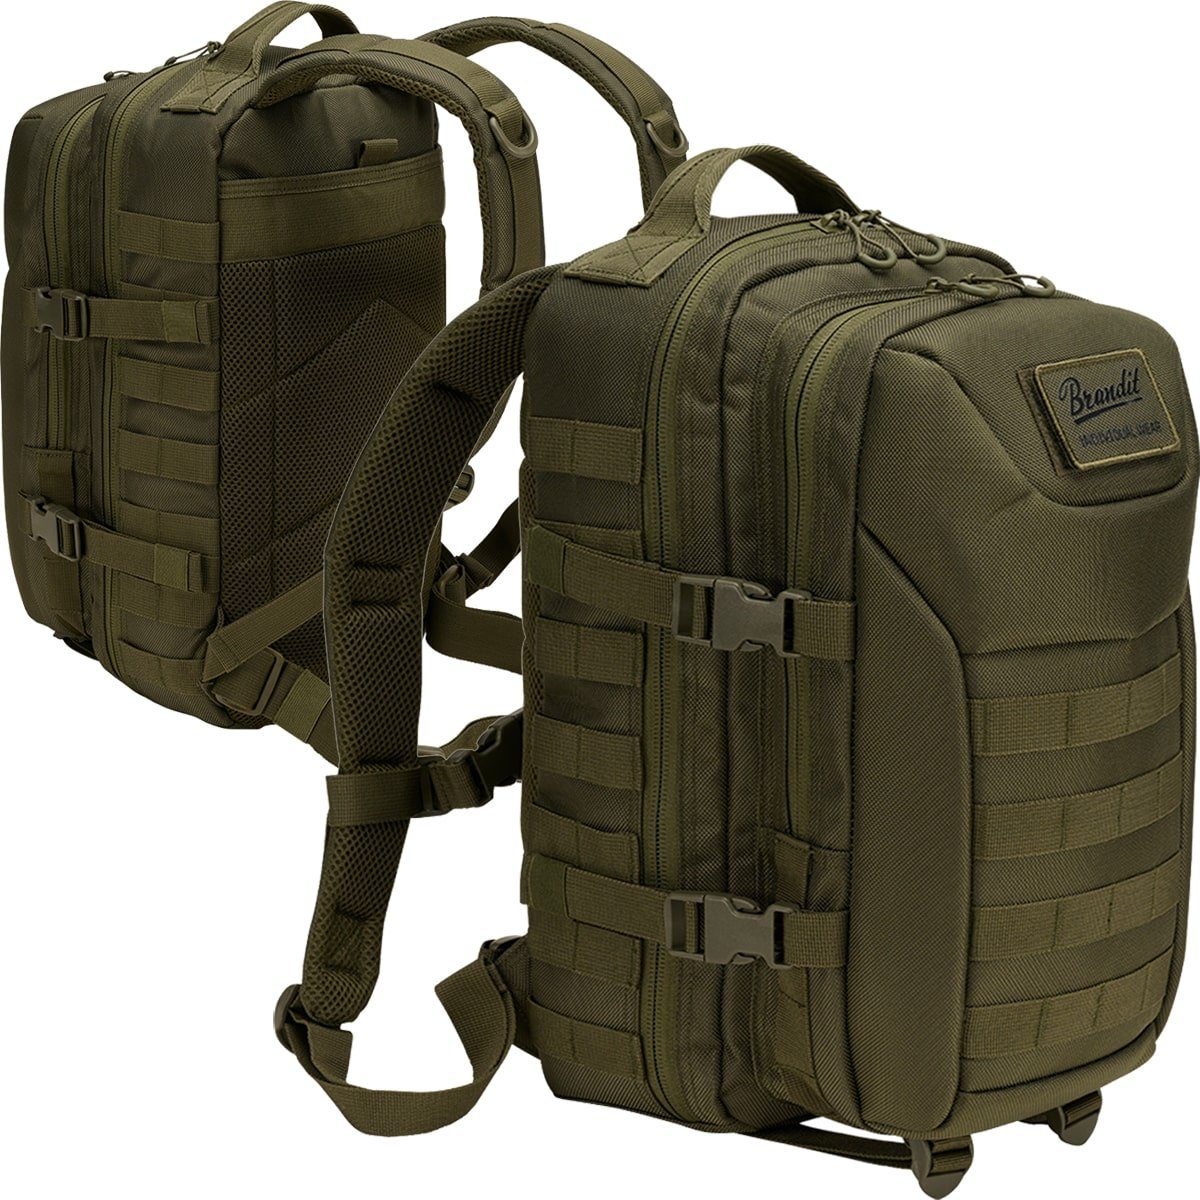 Oliv Trekkingrucksack Case Cooper Pack Brandit Assault US Rucksack